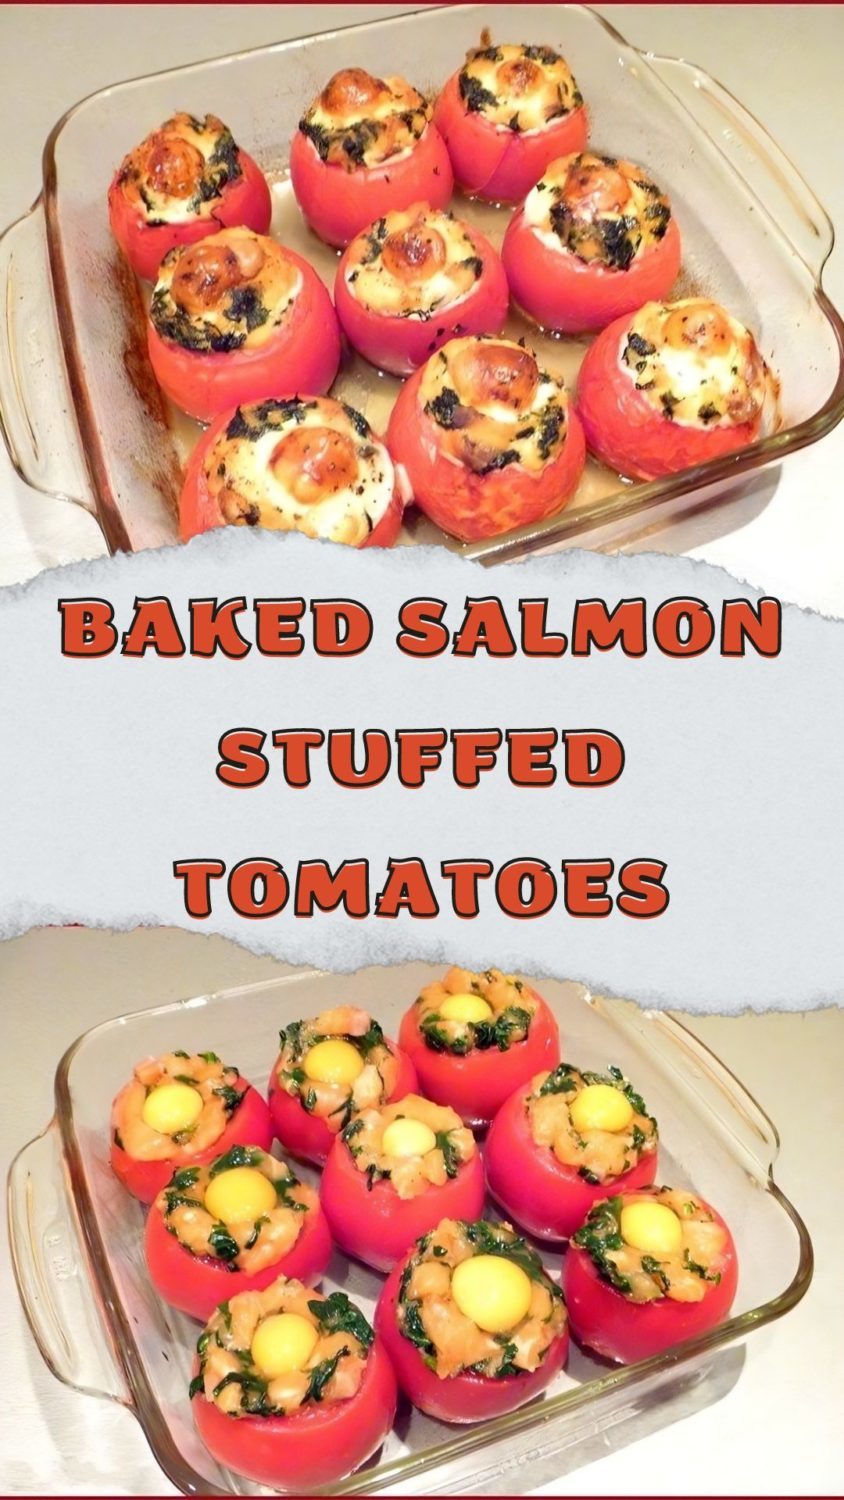 Baked salmon stuffed tomatoes